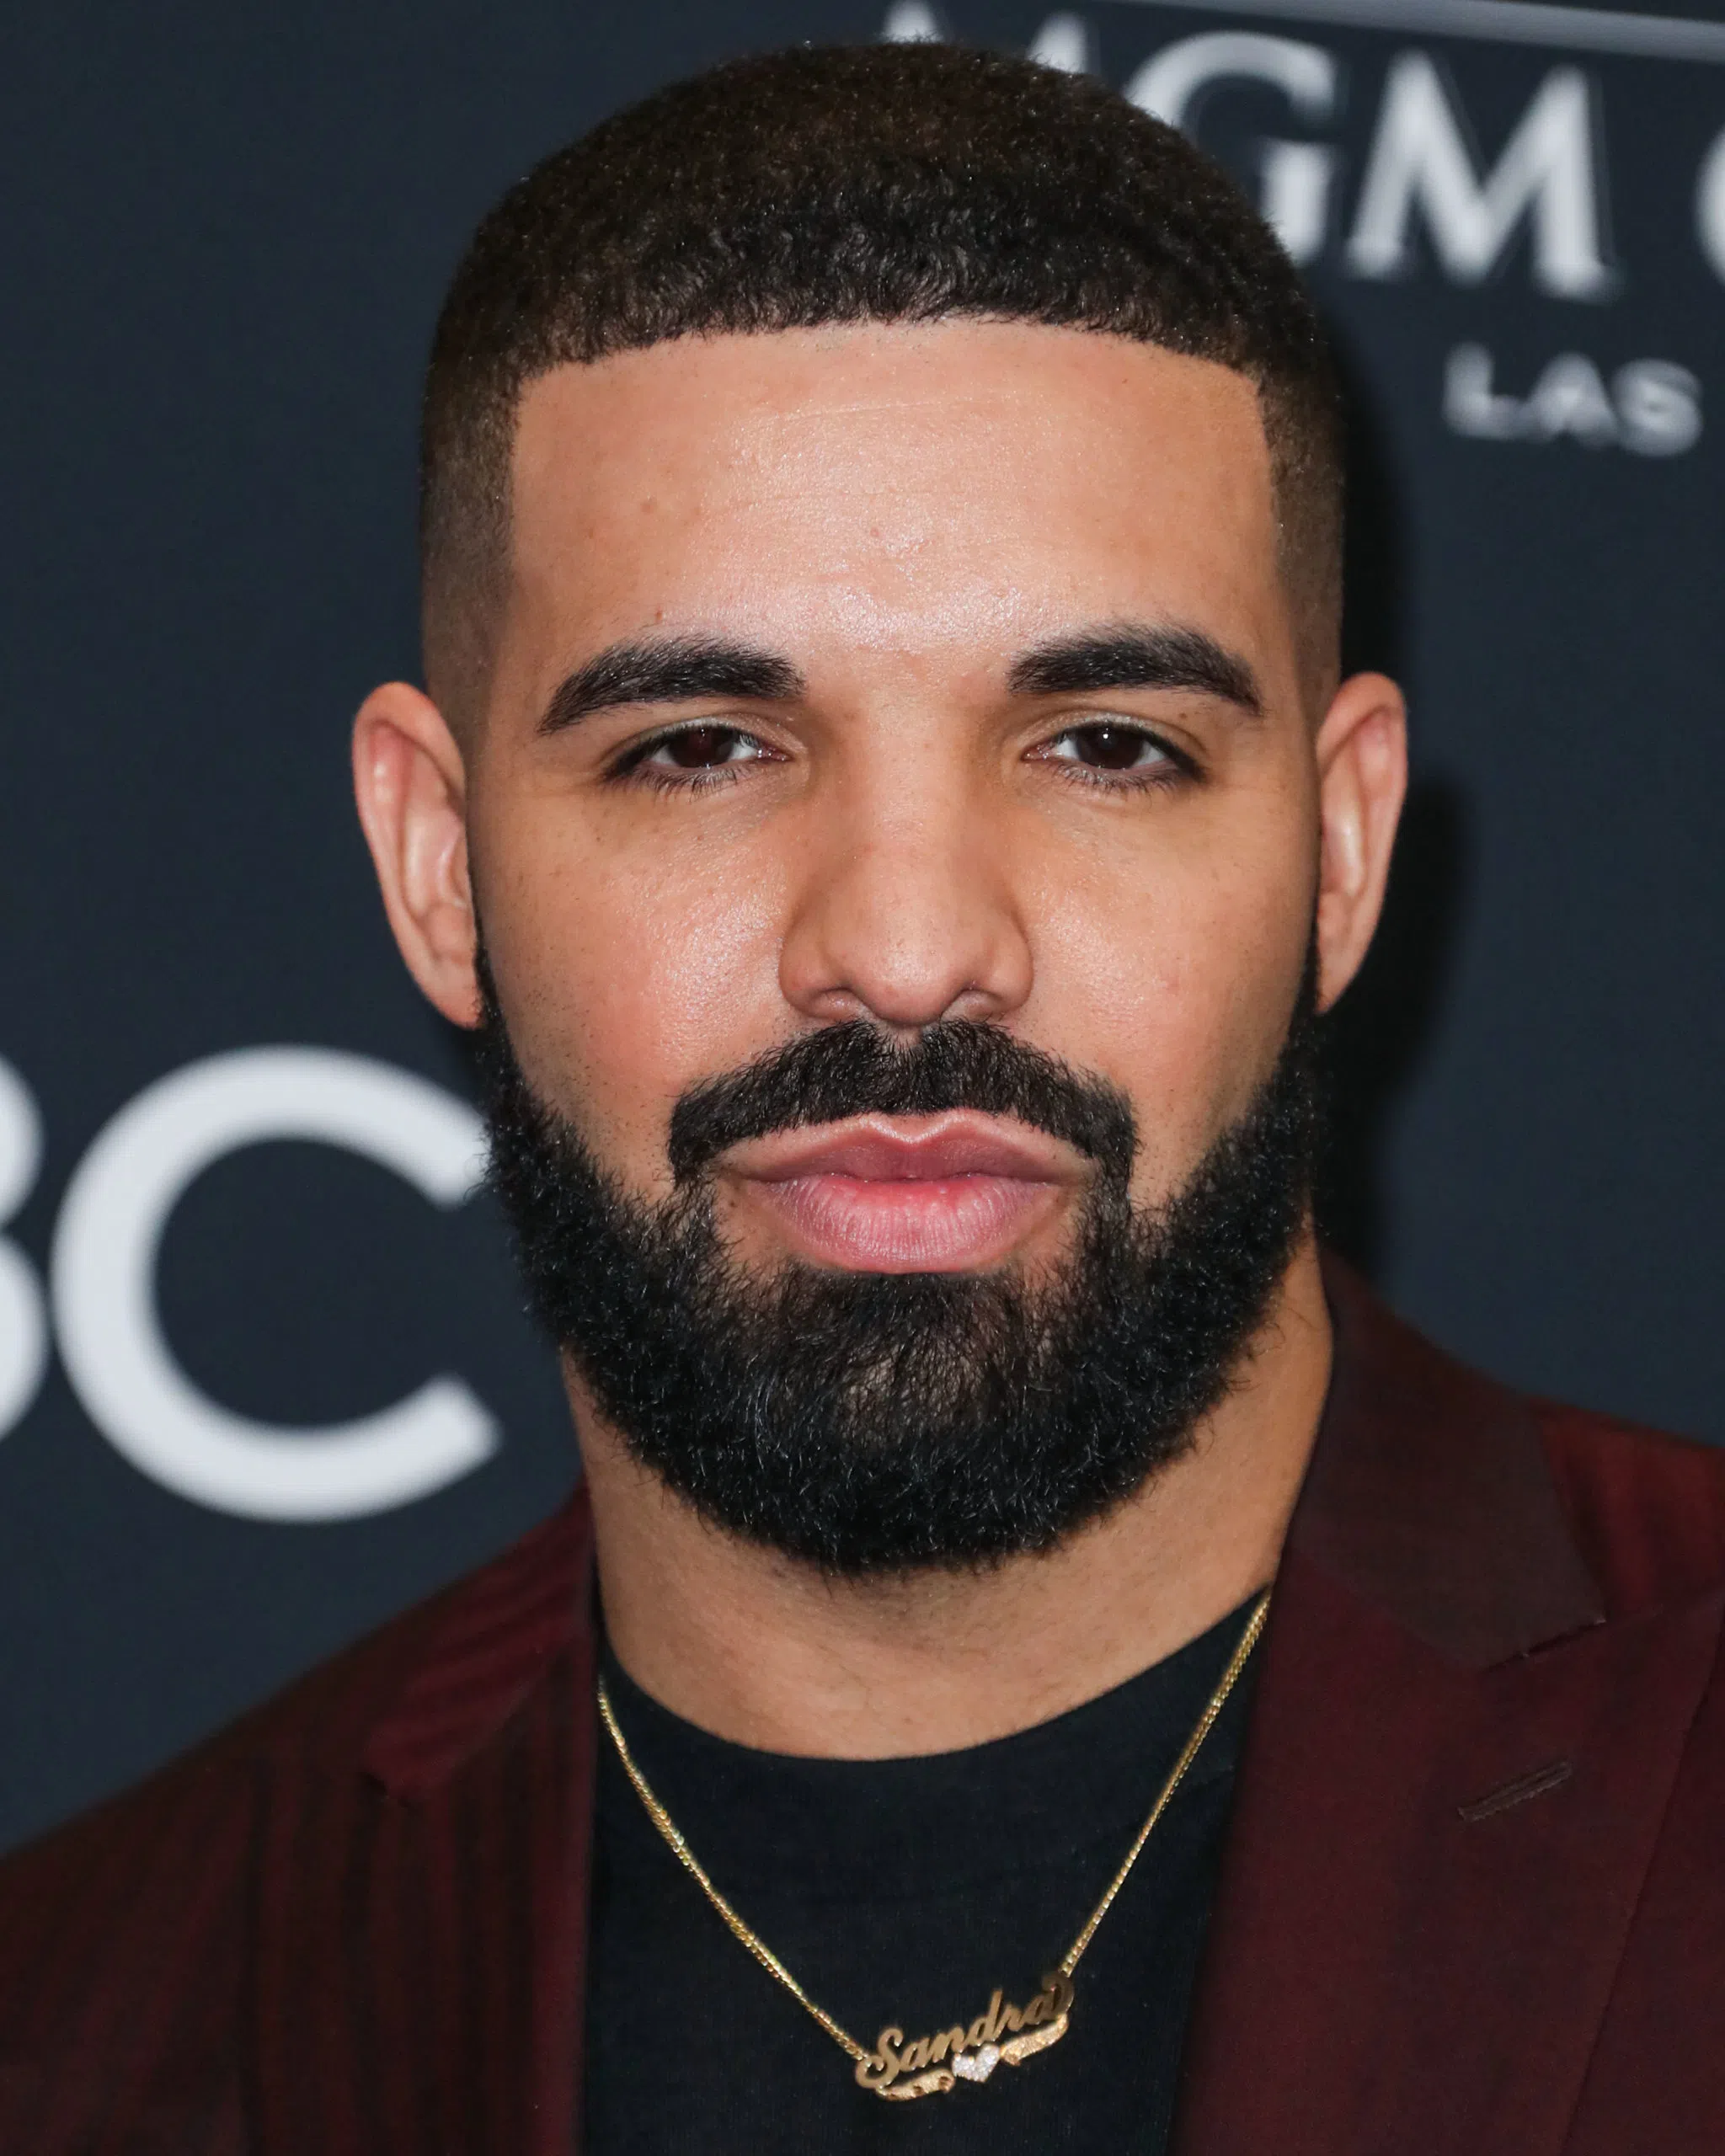 Drake Credits R Kelly As Co-Lyricist on ‘Certified Lover Boy’ Album